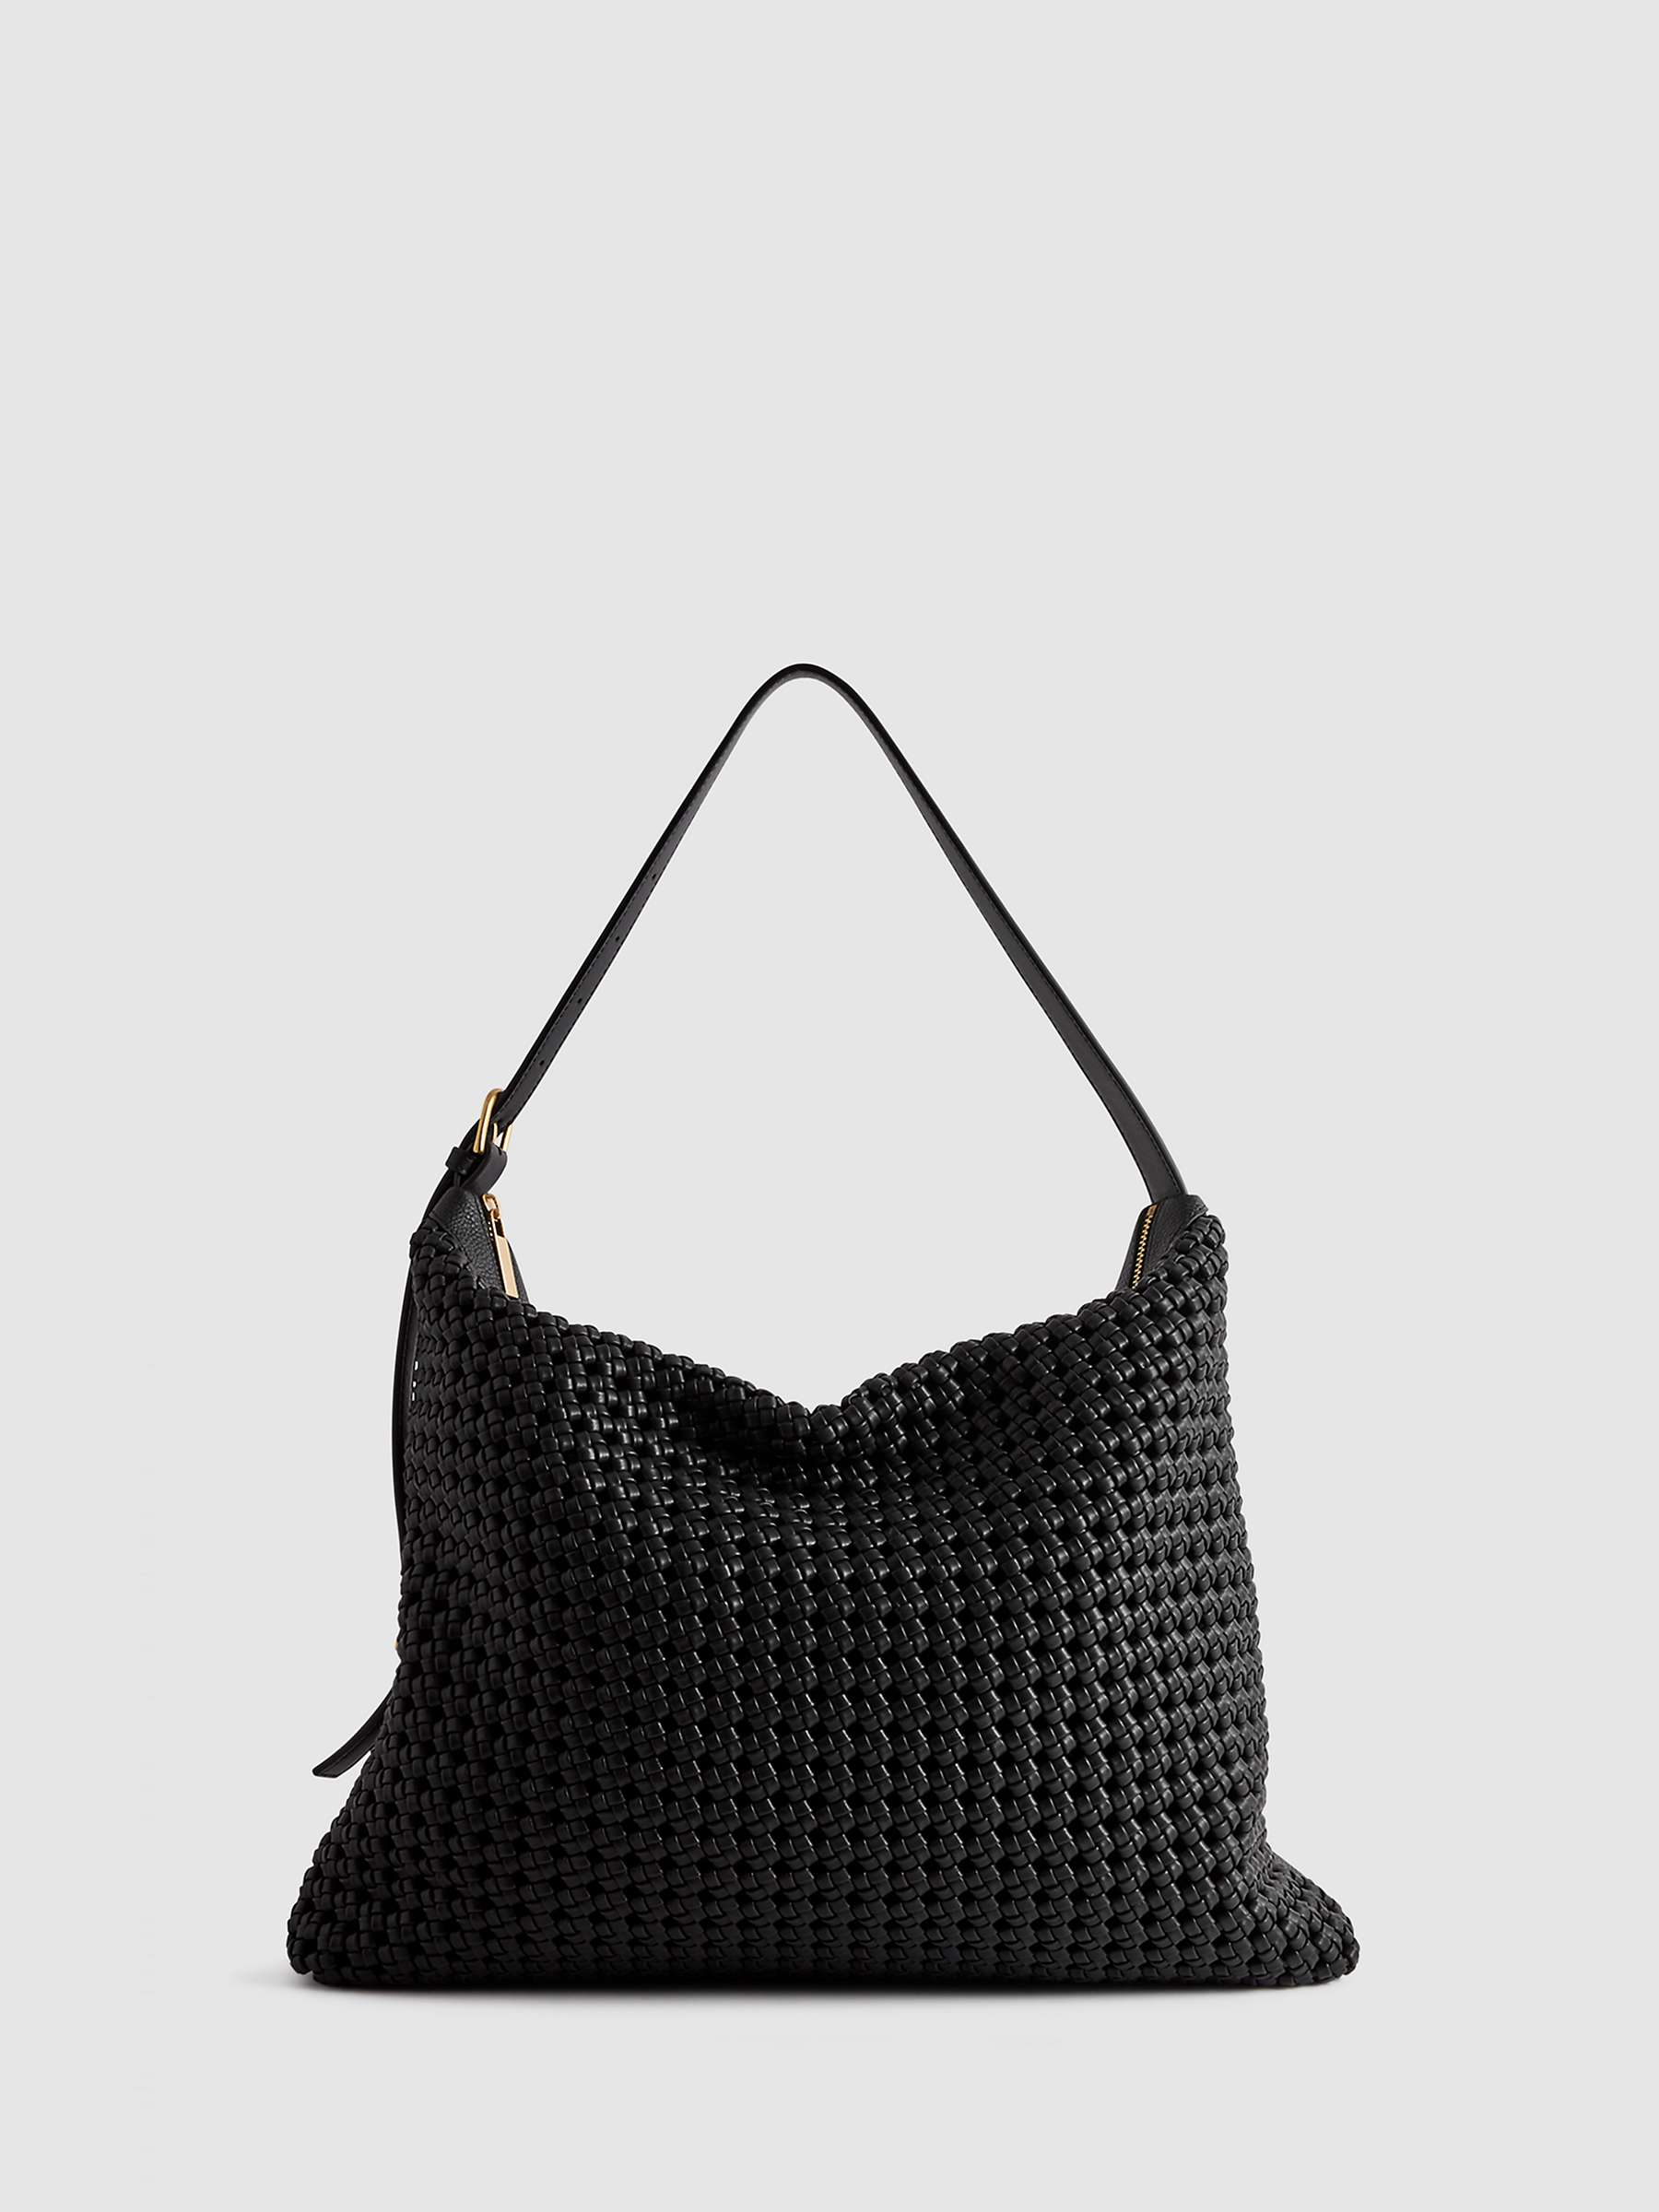 Buy Reiss Vigo Woven Leather Tote Bag, Black Online at johnlewis.com